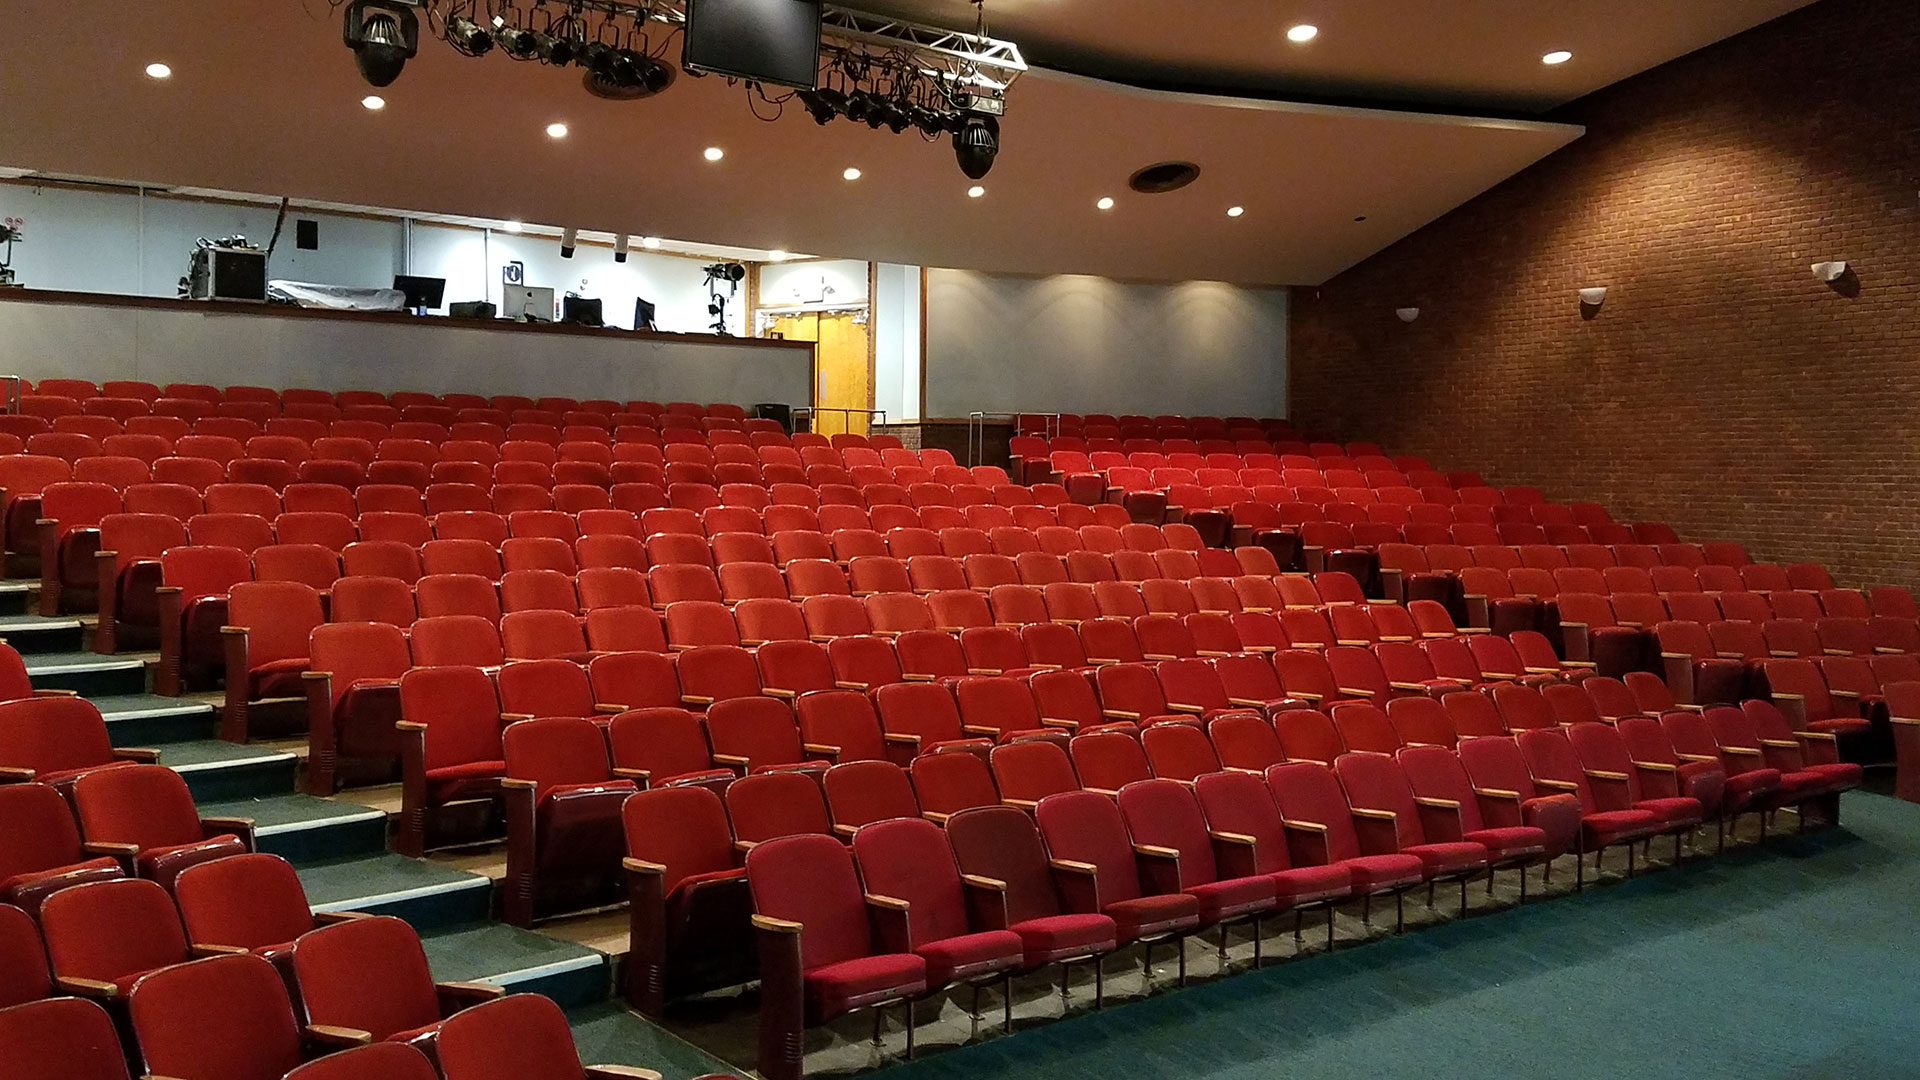 Theatre/Performing Arts Center